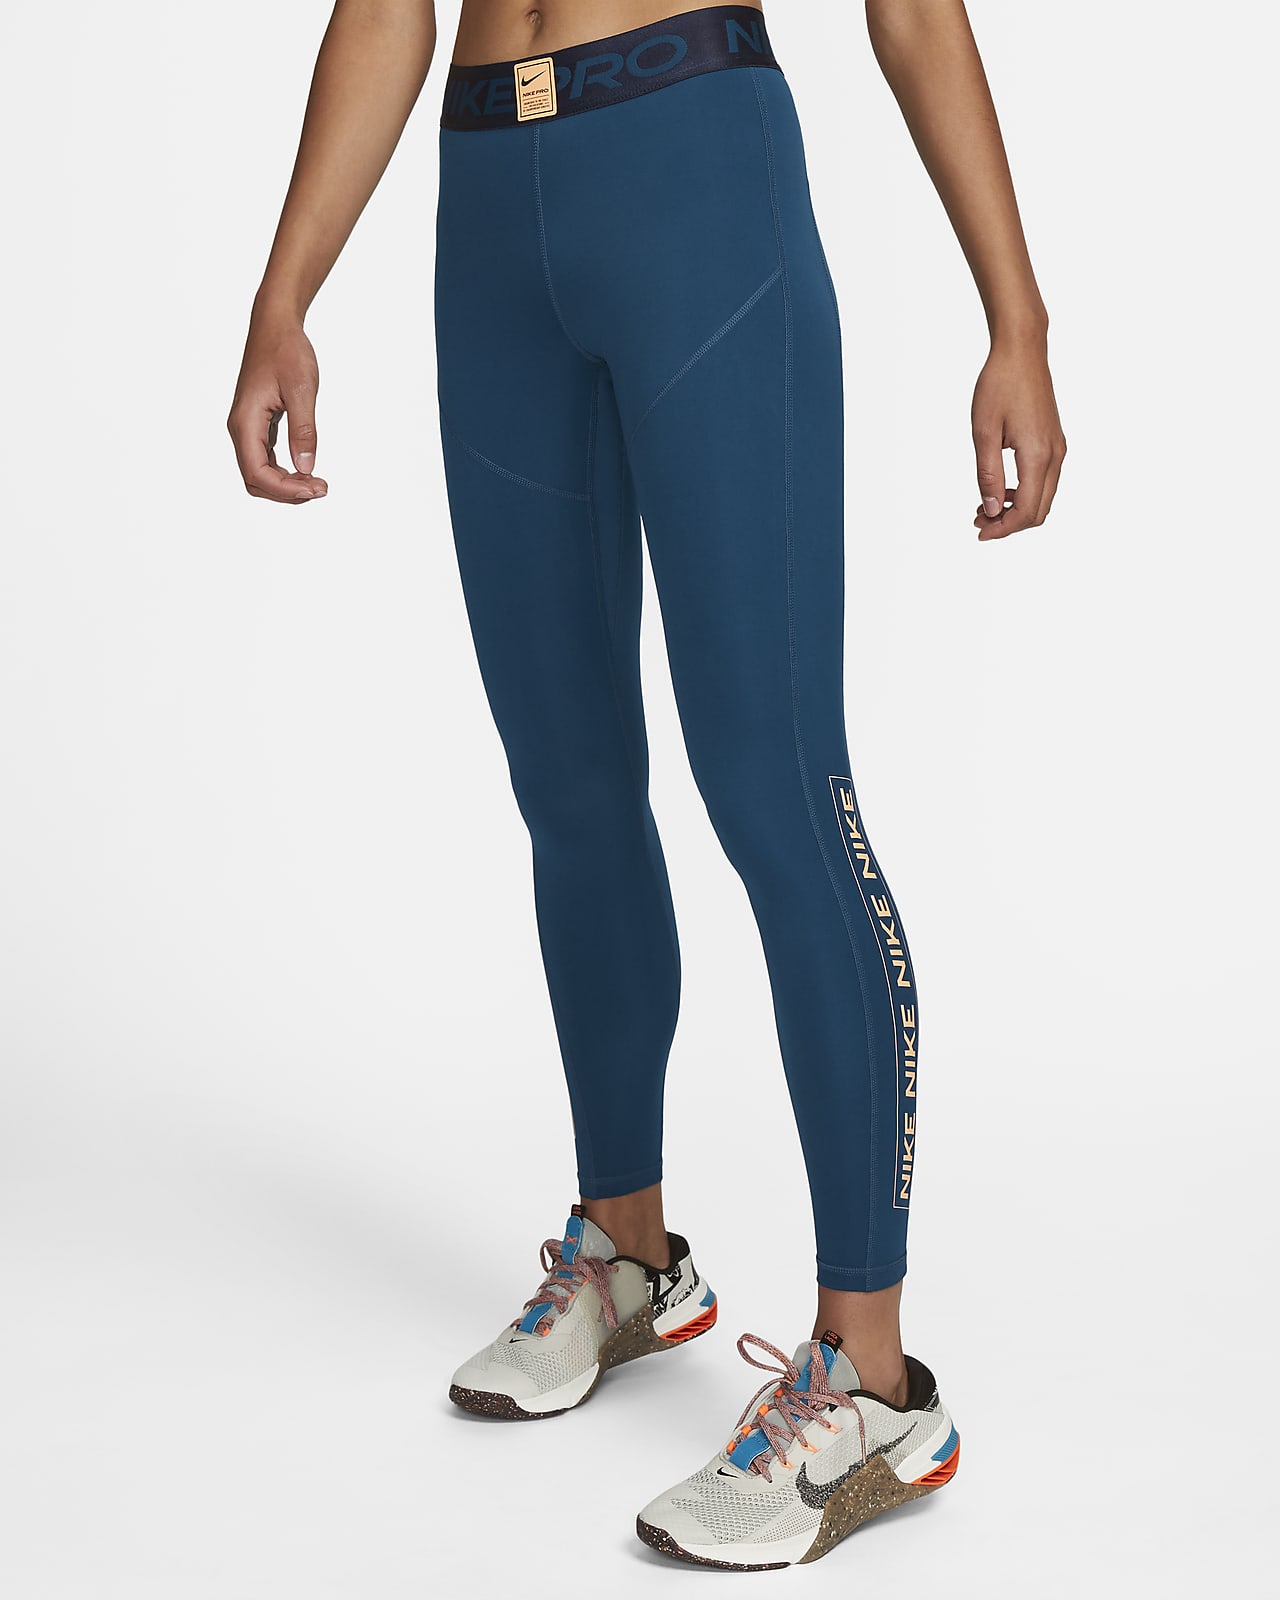 Nike Pro Women's Graphic Mid-Rise Leggings